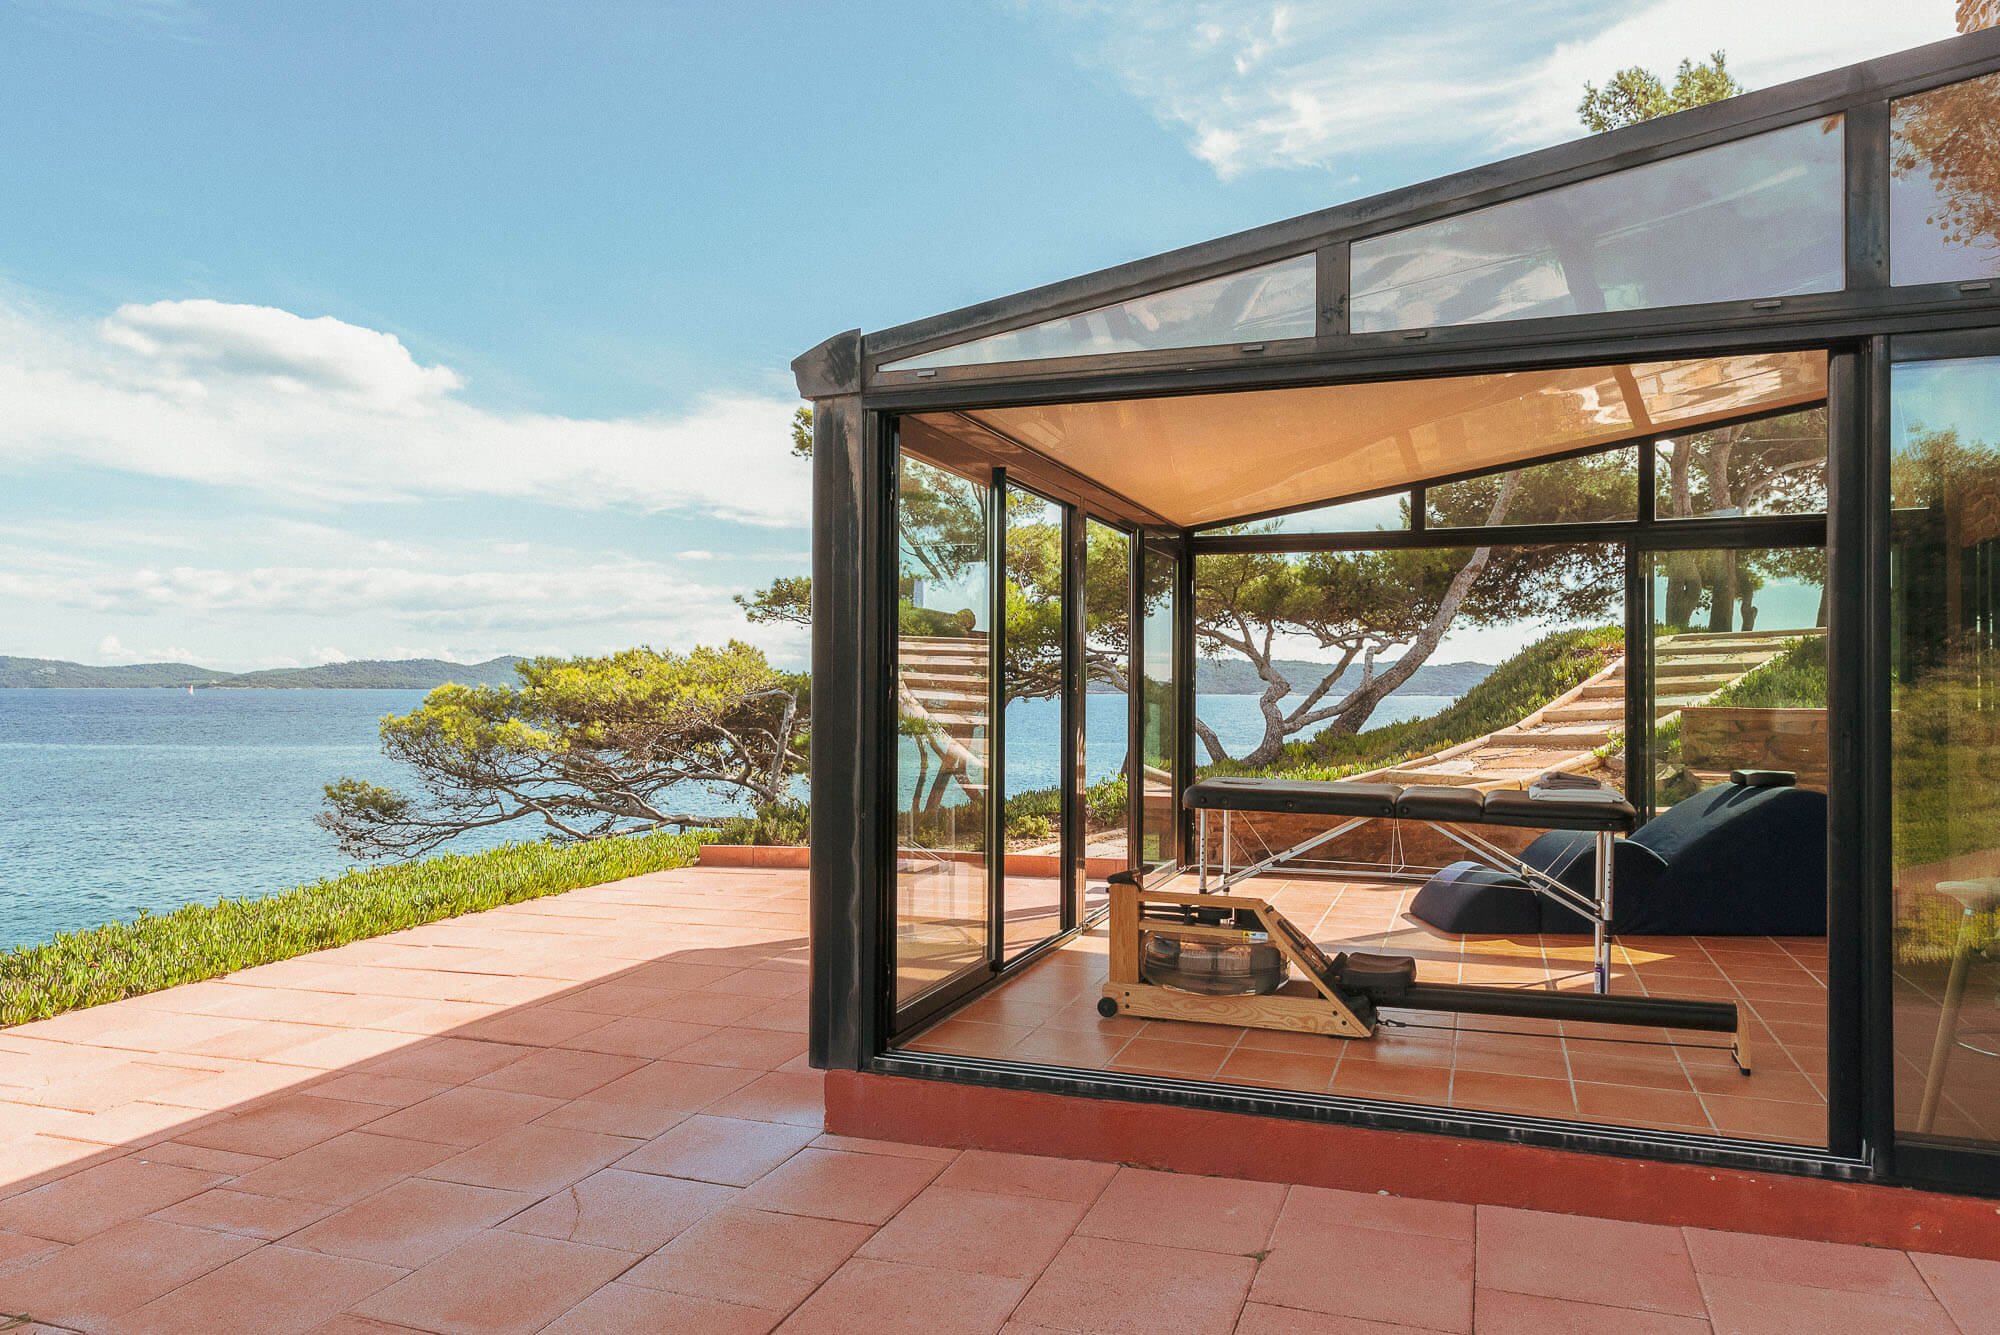 Prestigious villa on the Mediterranean coast on the Côte d'Azur